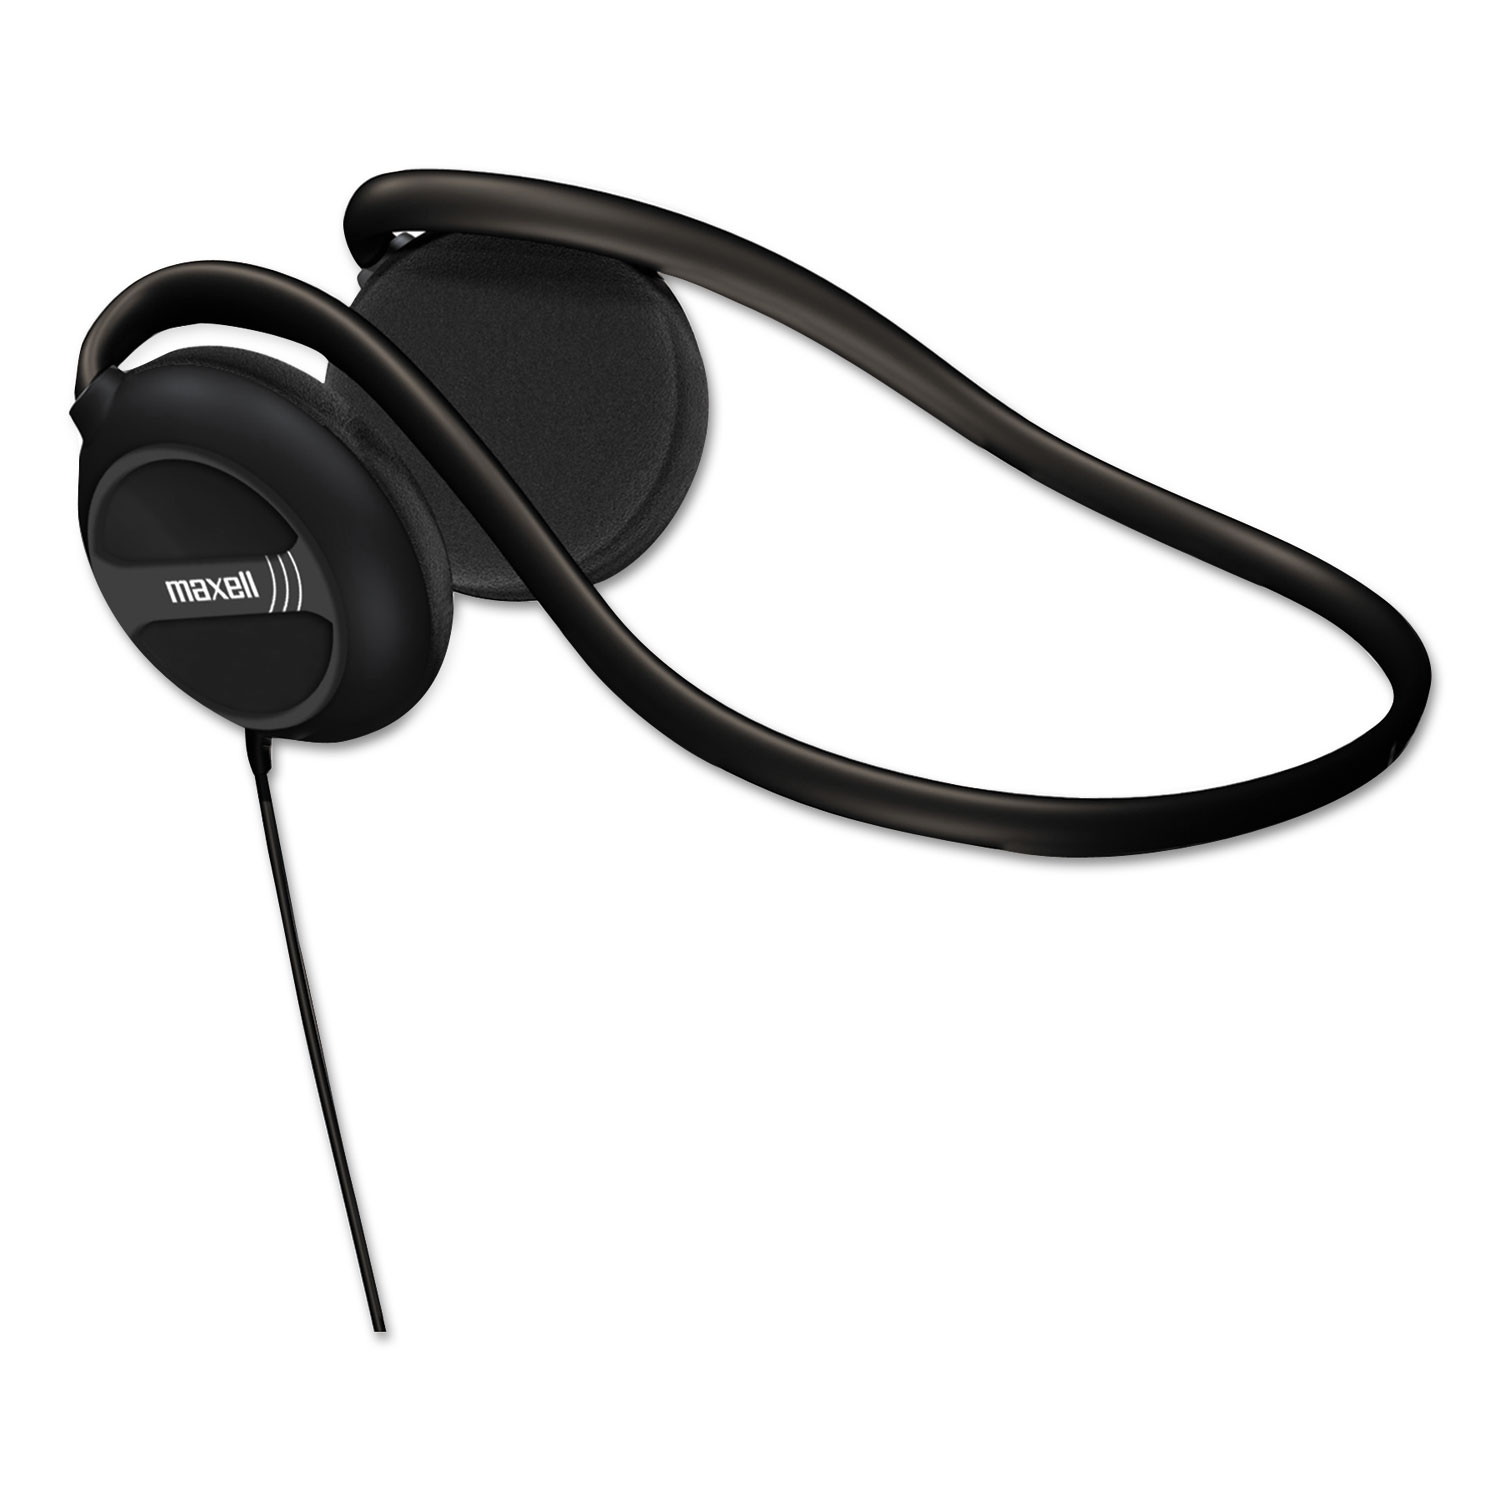 NB201 Stereo Neckband Headphones, Black, 49.5 Cord